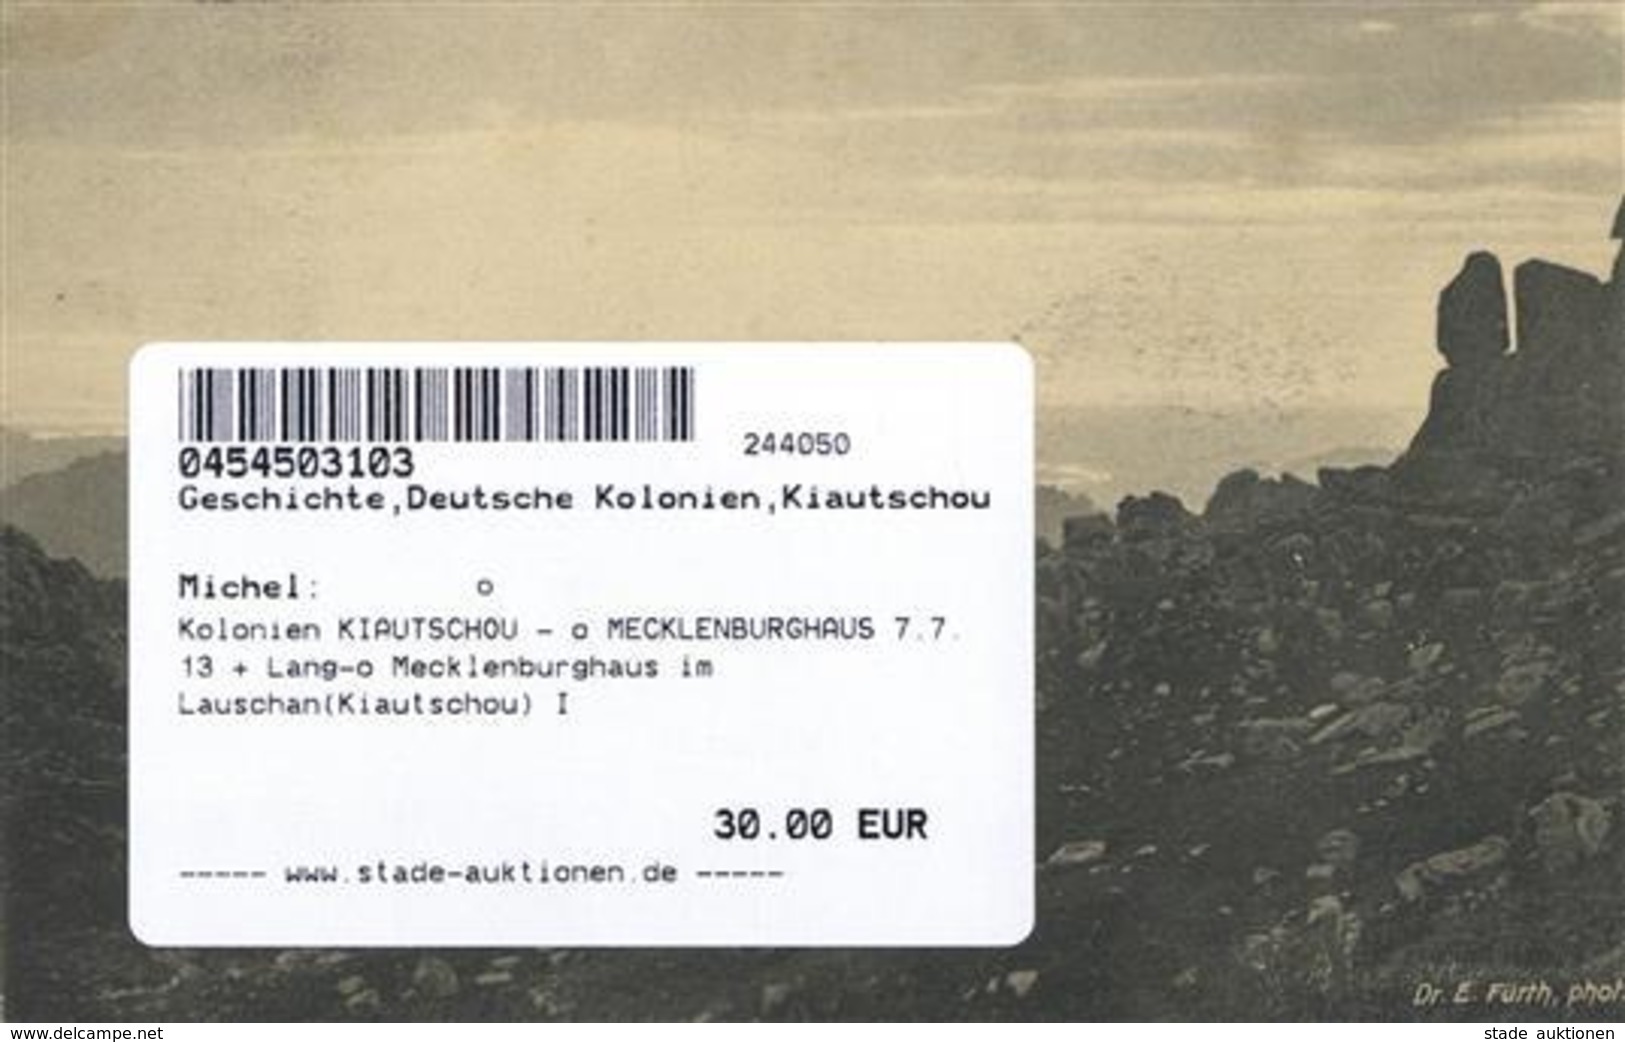 Kolonien KIAUTSCHOU - O MECKLENBURGHAUS 7.7.13 + Lang-o Mecklenburghaus Im Lauschan(Kiautschou) I Colonies - History